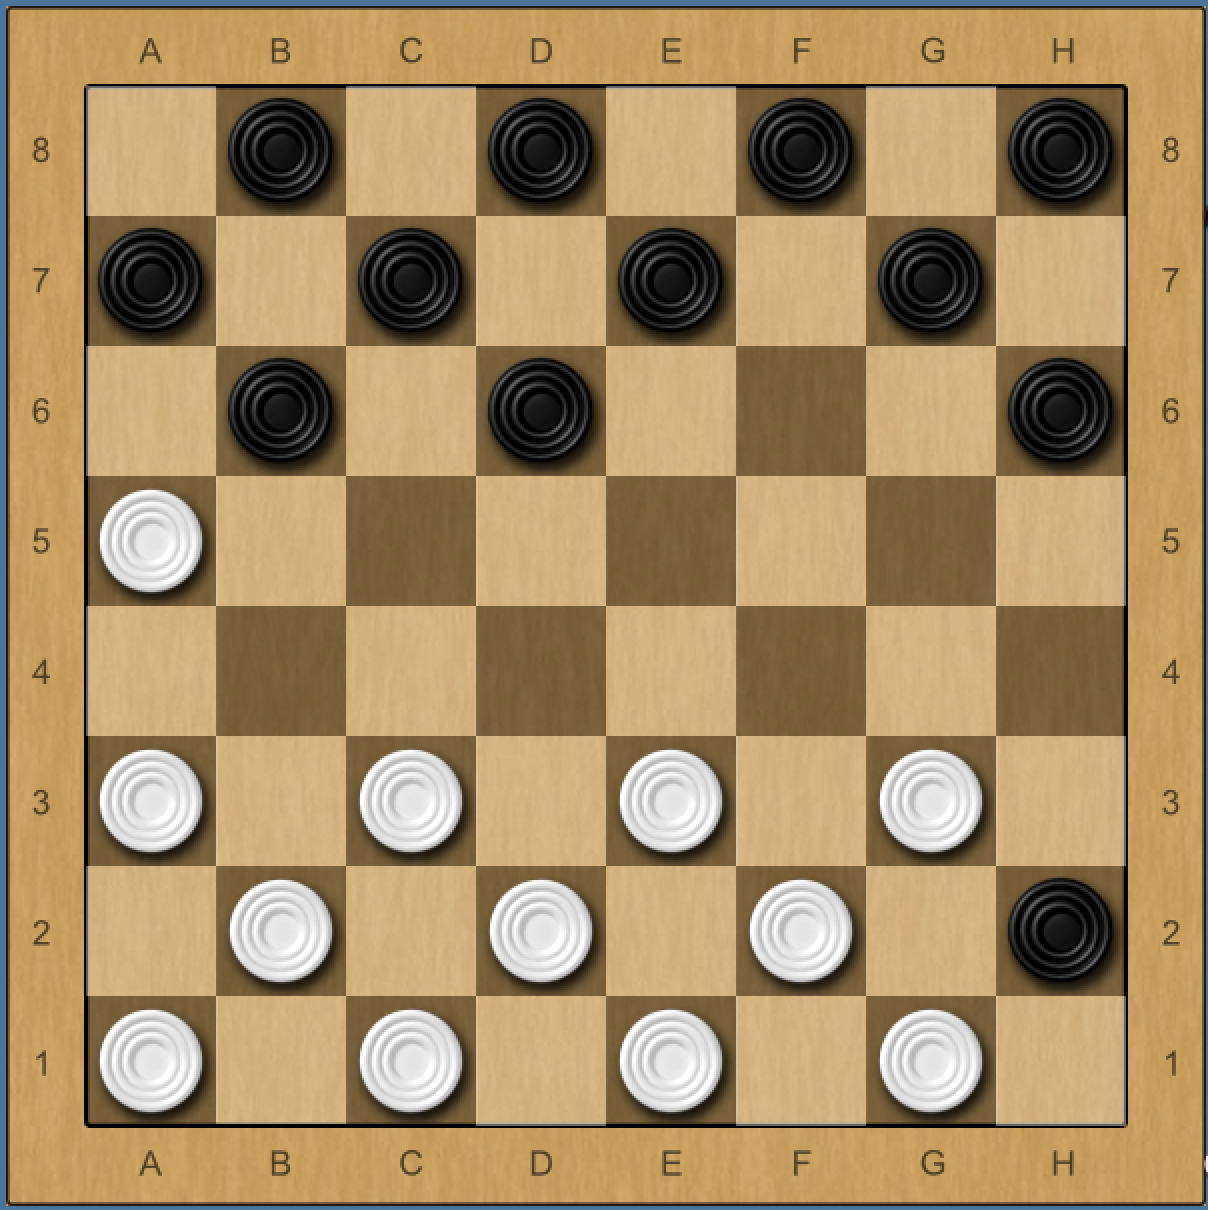 Игра в шашки одной шашкой. Русские шашки 8.1.50. Дебют Розенберг шашки. Шашки 2.17.2.